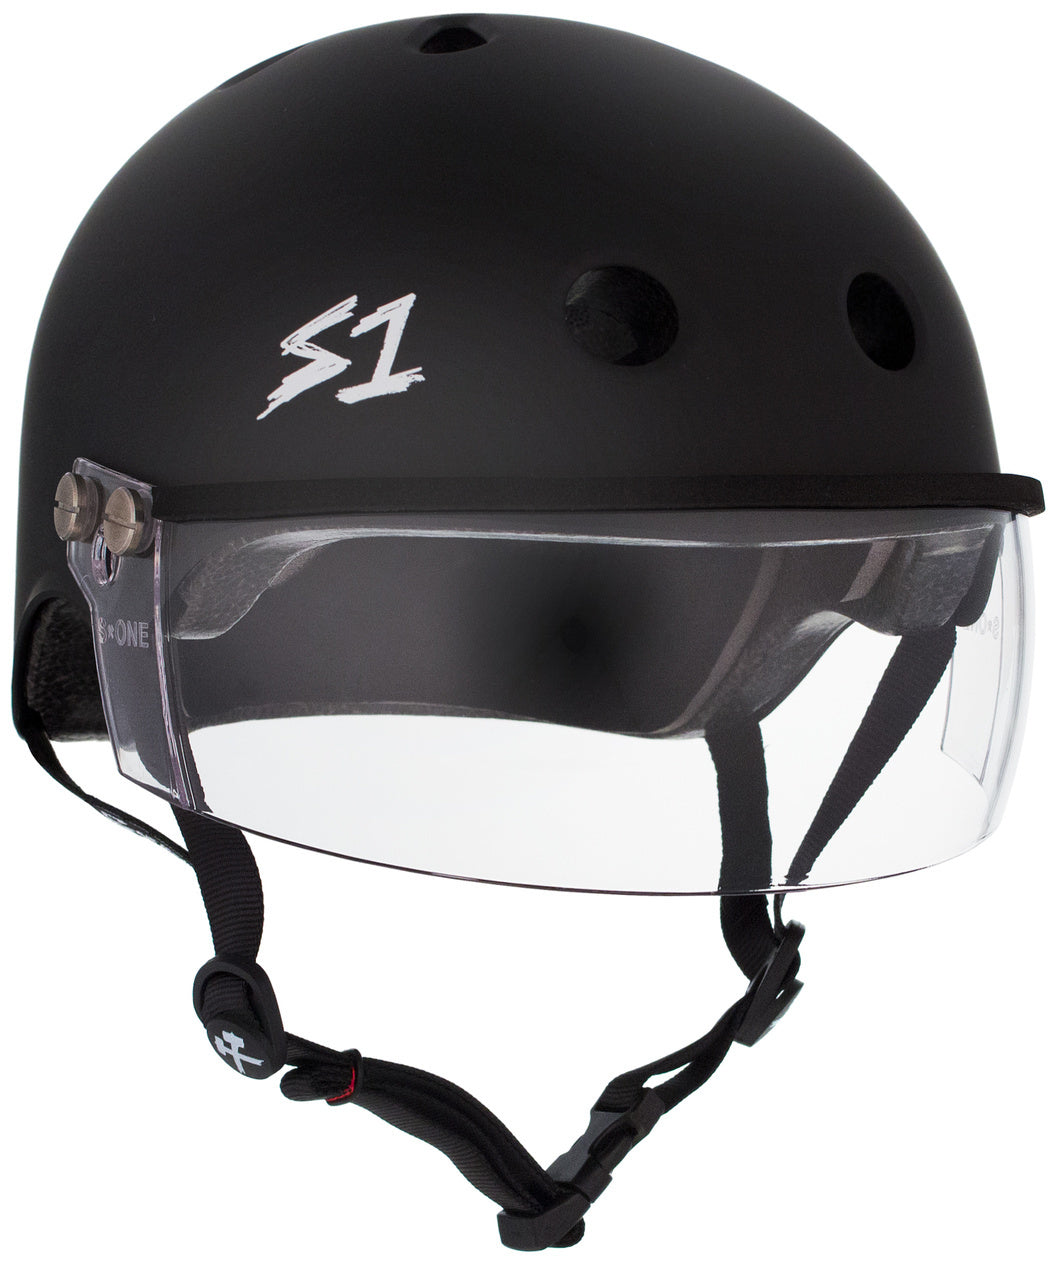 187 Killer Pads Pro Skate Helmet with Sweatsaver Liner, Charcoal Matte,  Large